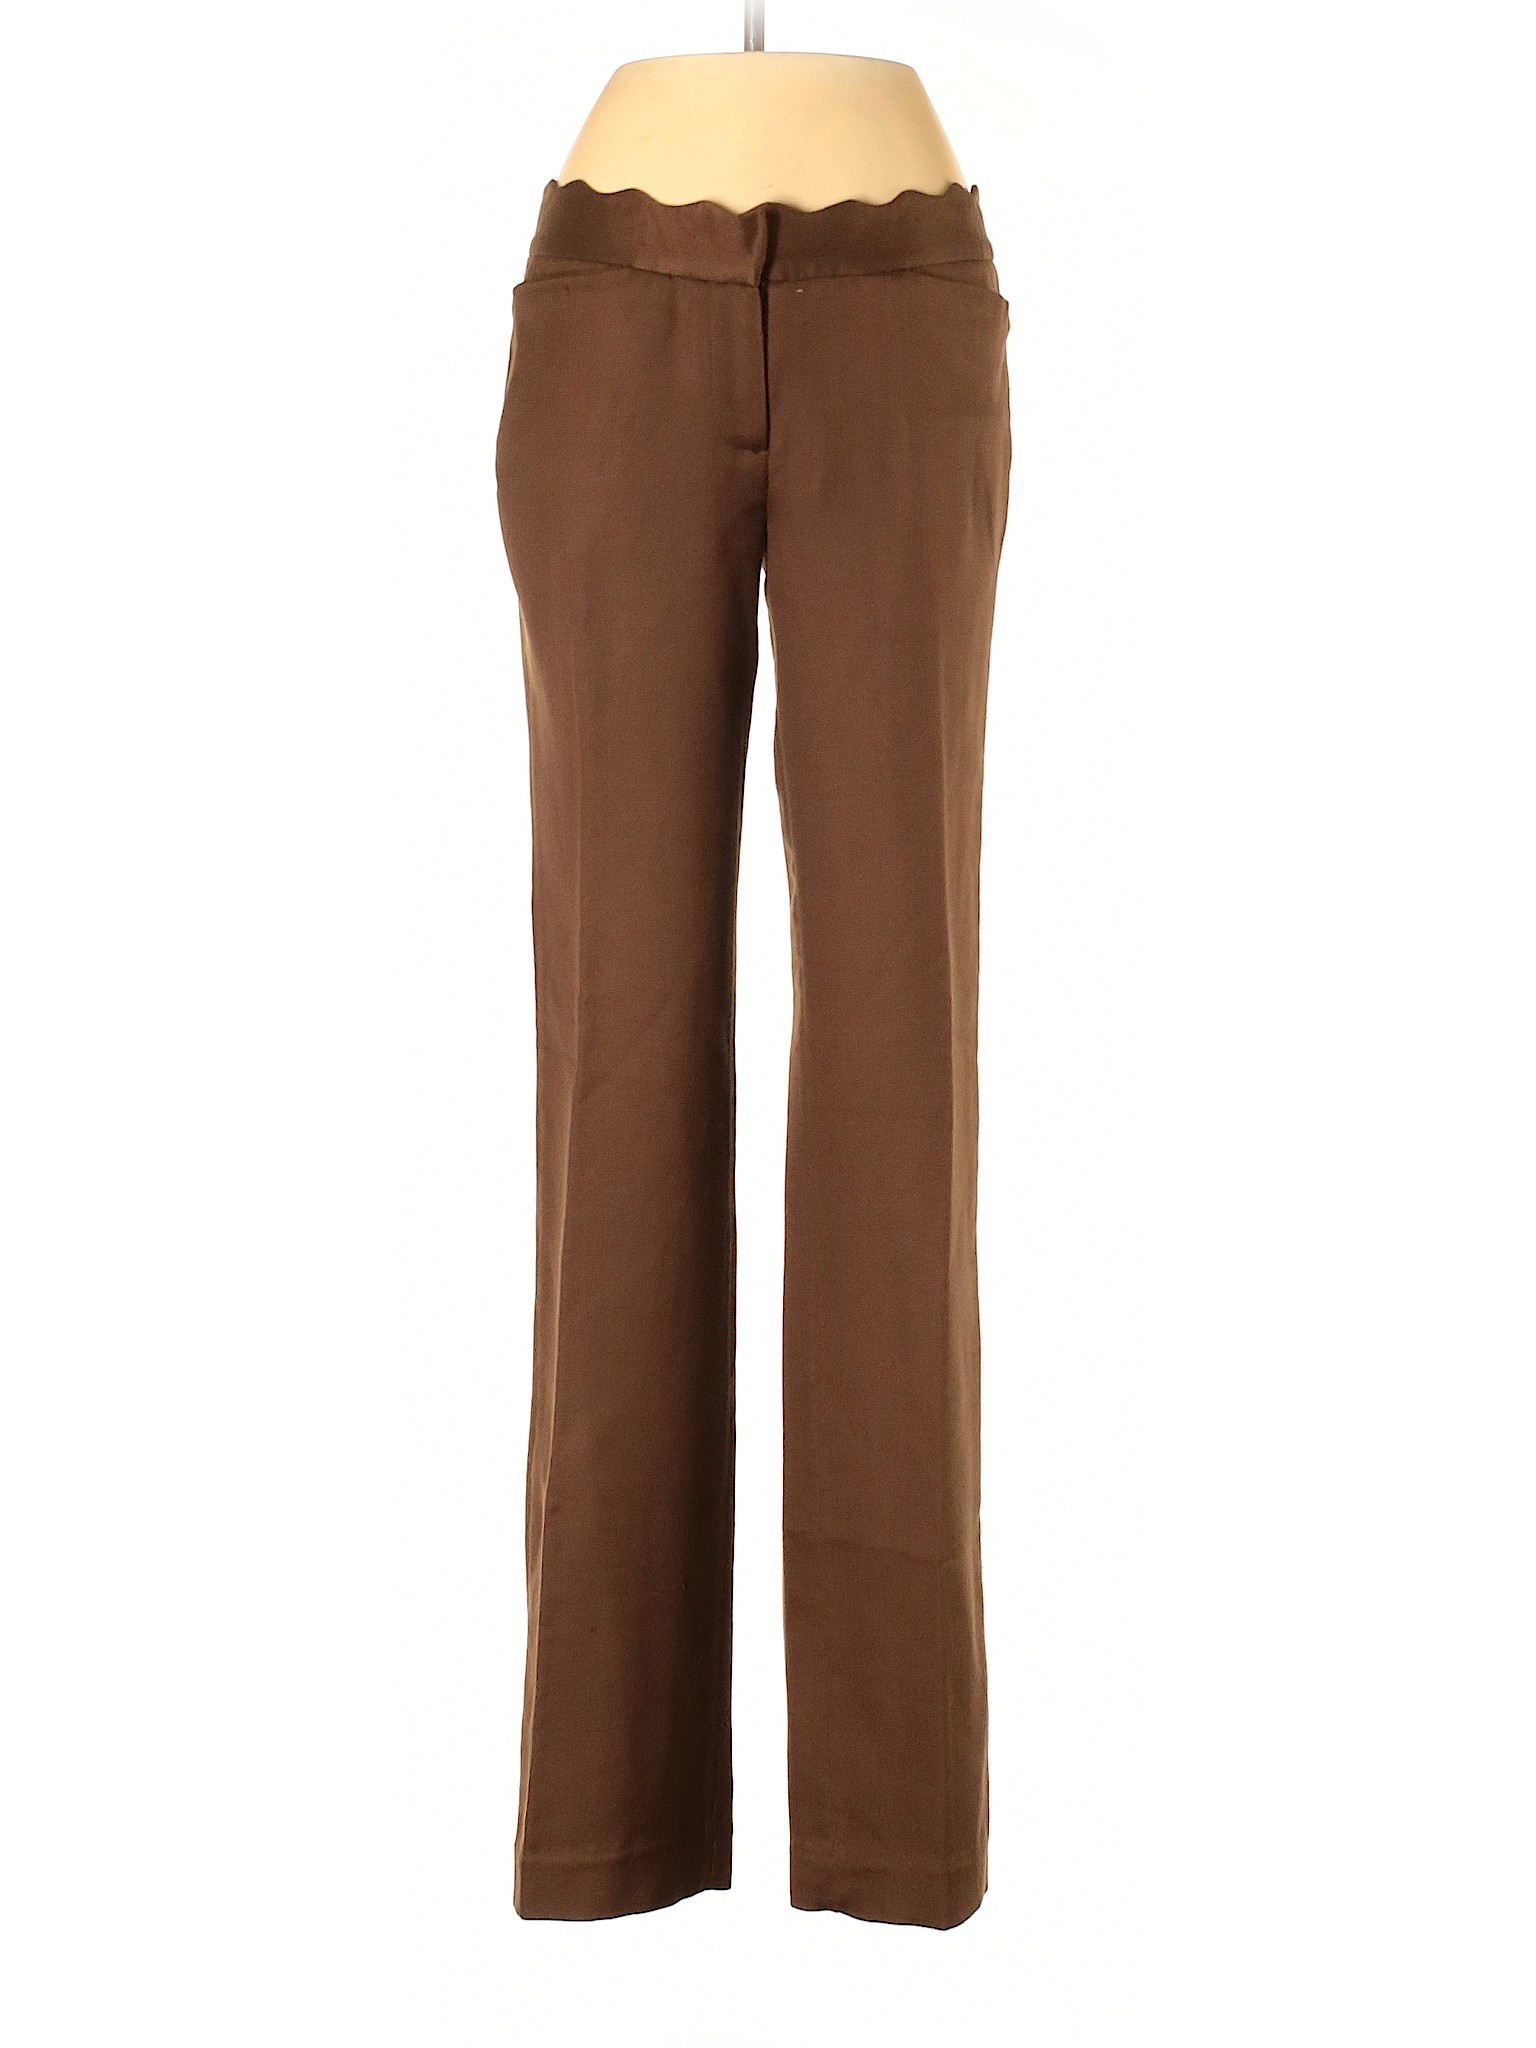 Assorted Brands Women Brown Silk Pants 0 | eBay